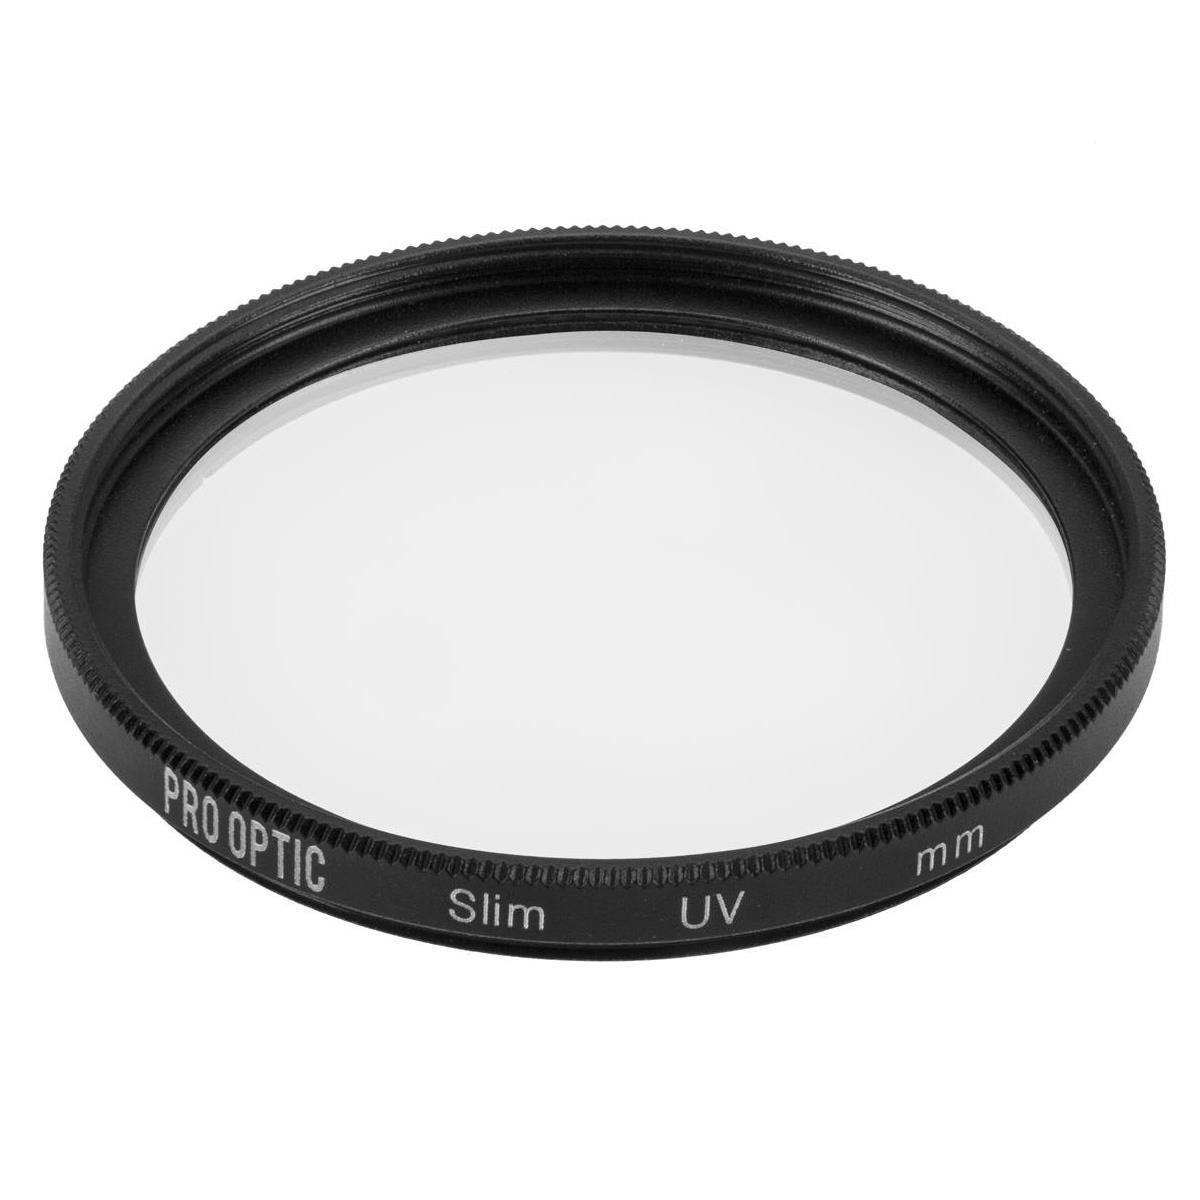 ProOPTIC Pro Digital 58mm Multi Coated UV Slim Filter цена и фото